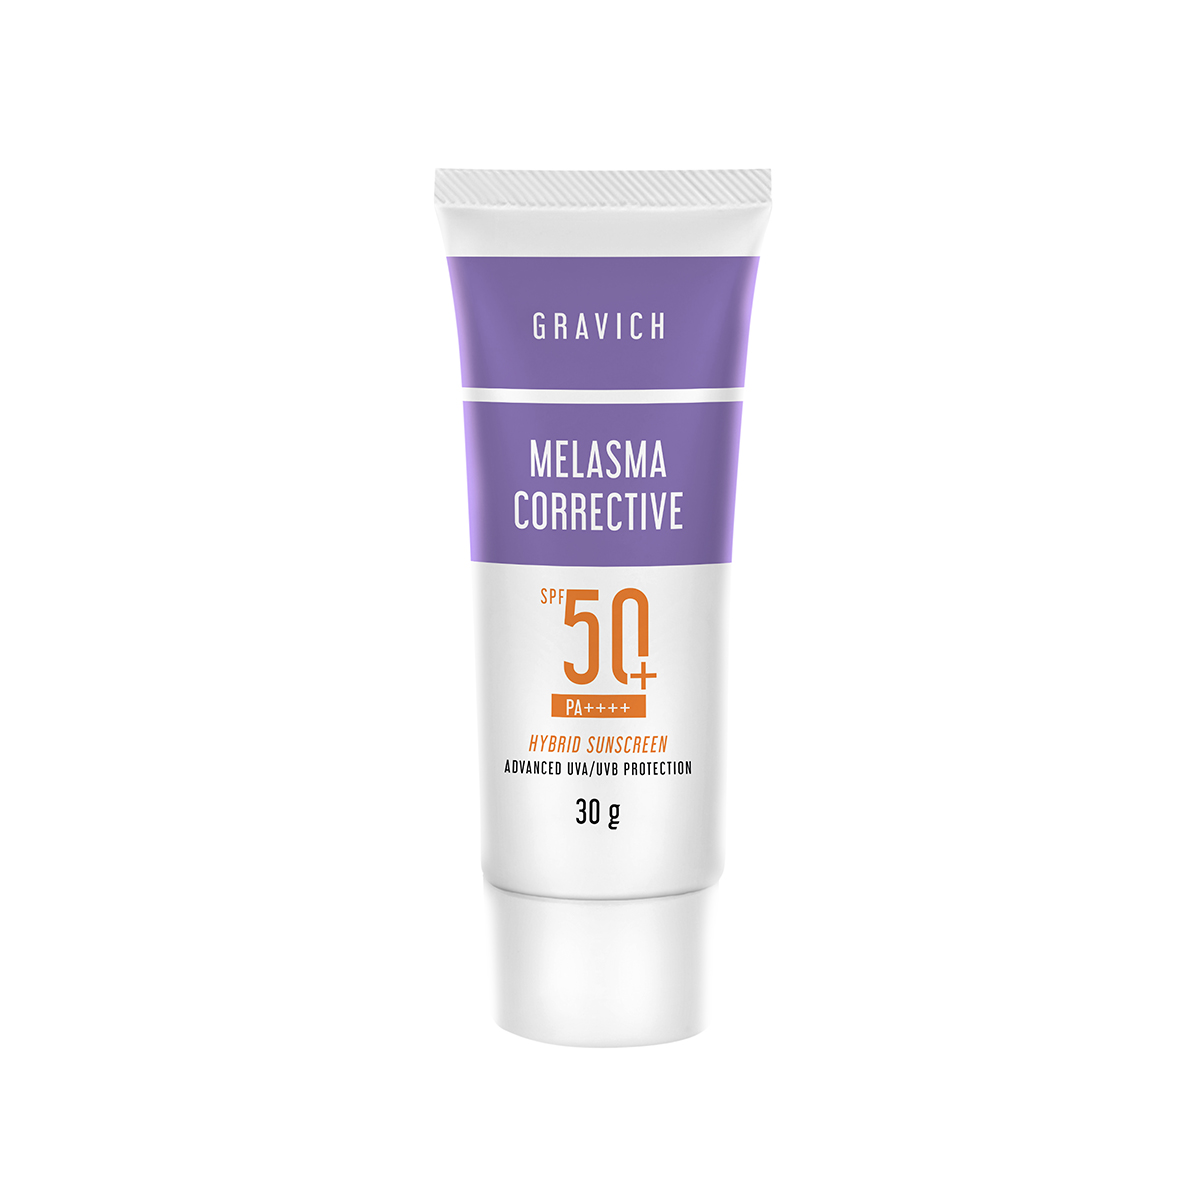 Gravich Melasma Corrective Hybrid Sunscreen SPF50+ PA++++ 30 g